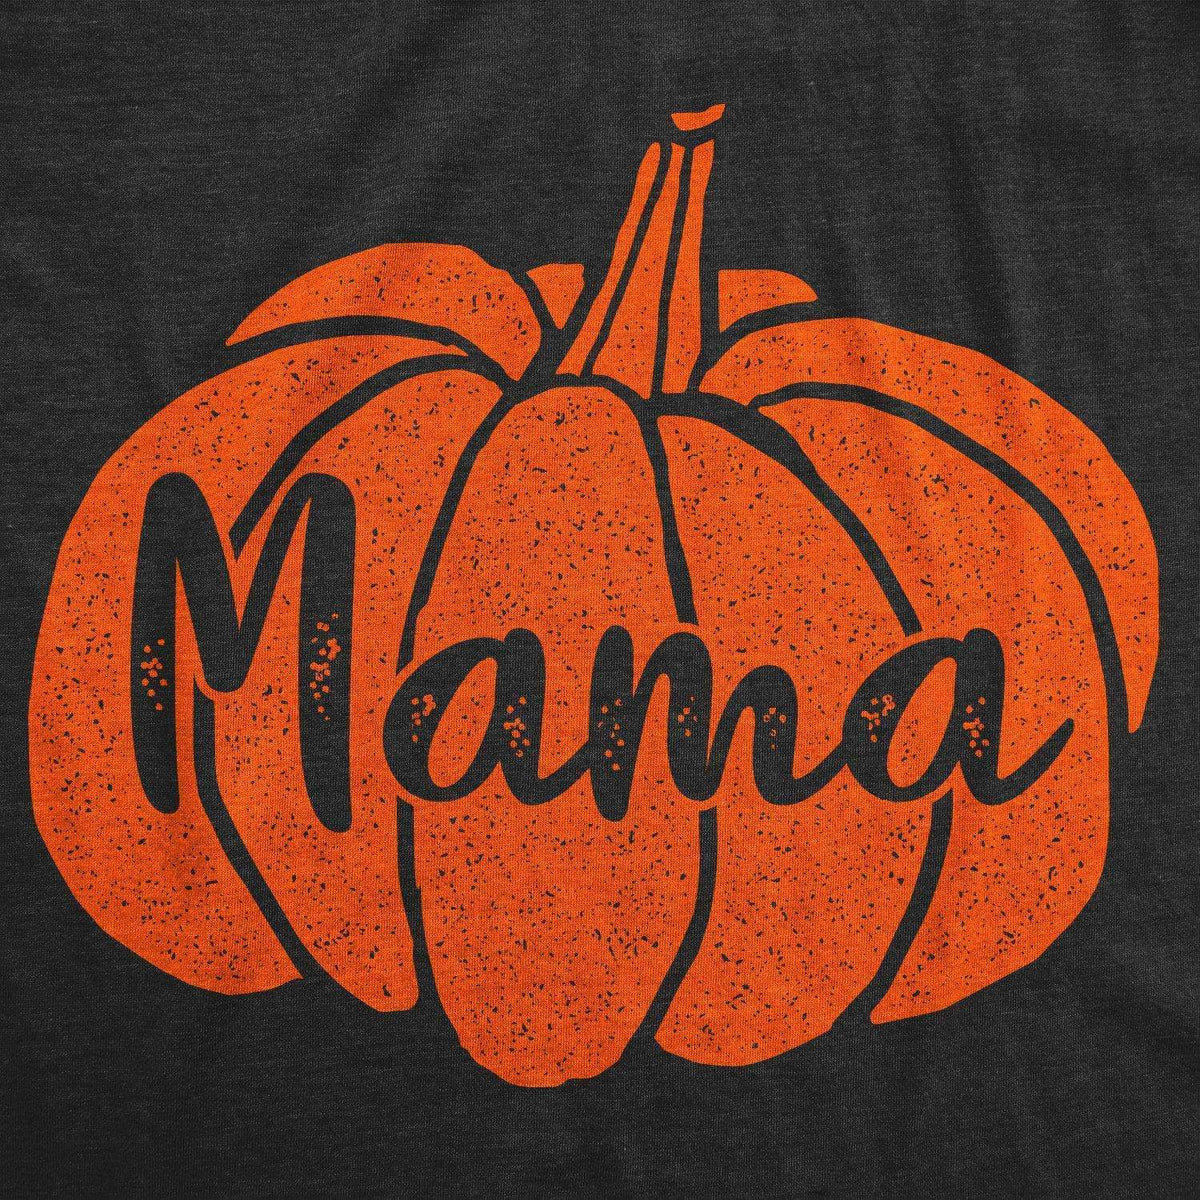 Mama Pumpkin Women&#39;s Tshirt - Crazy Dog T-Shirts